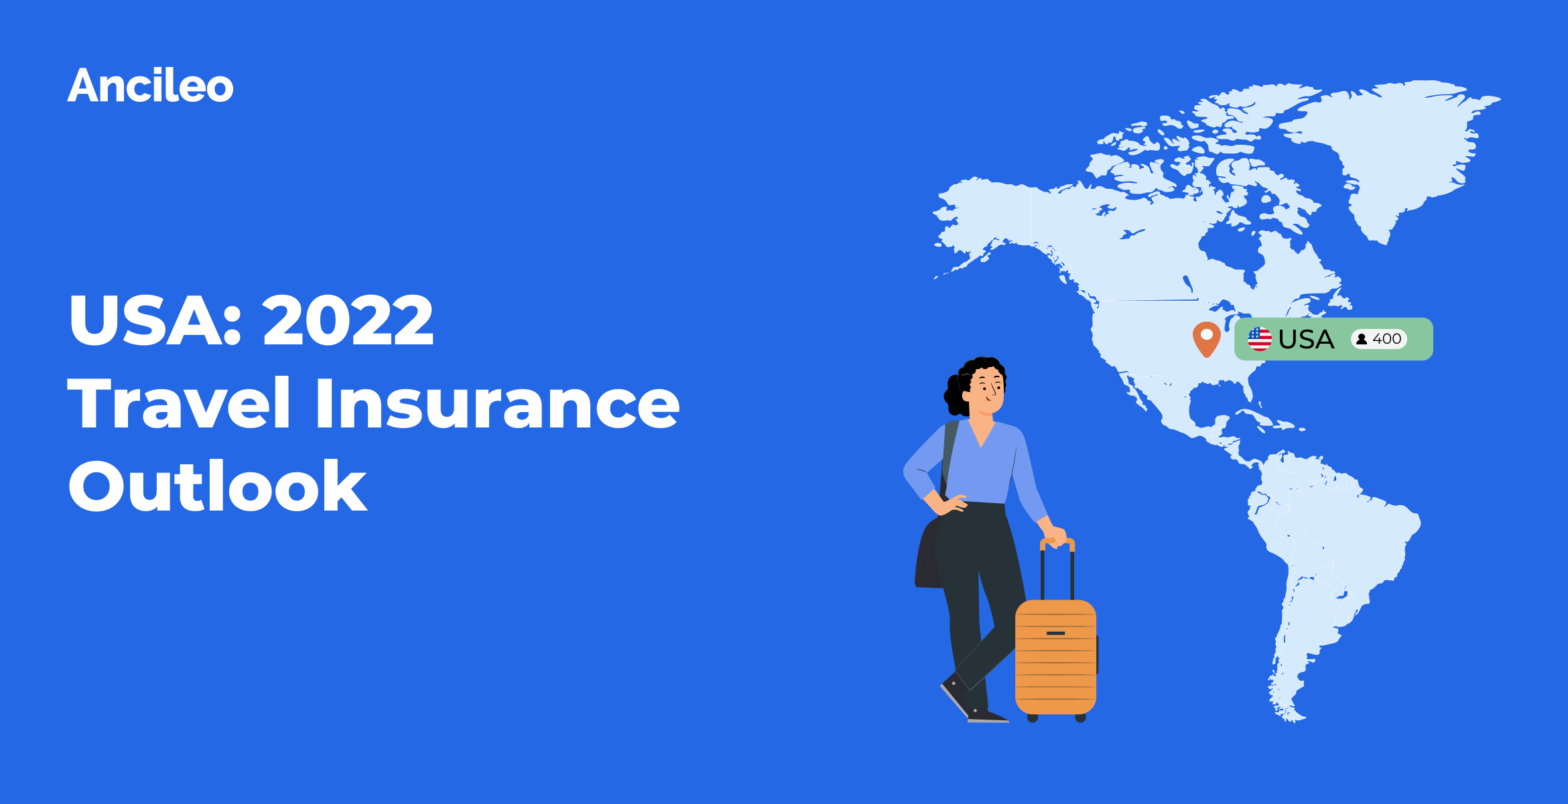 USA: 2022 Travel Insurance Outlook